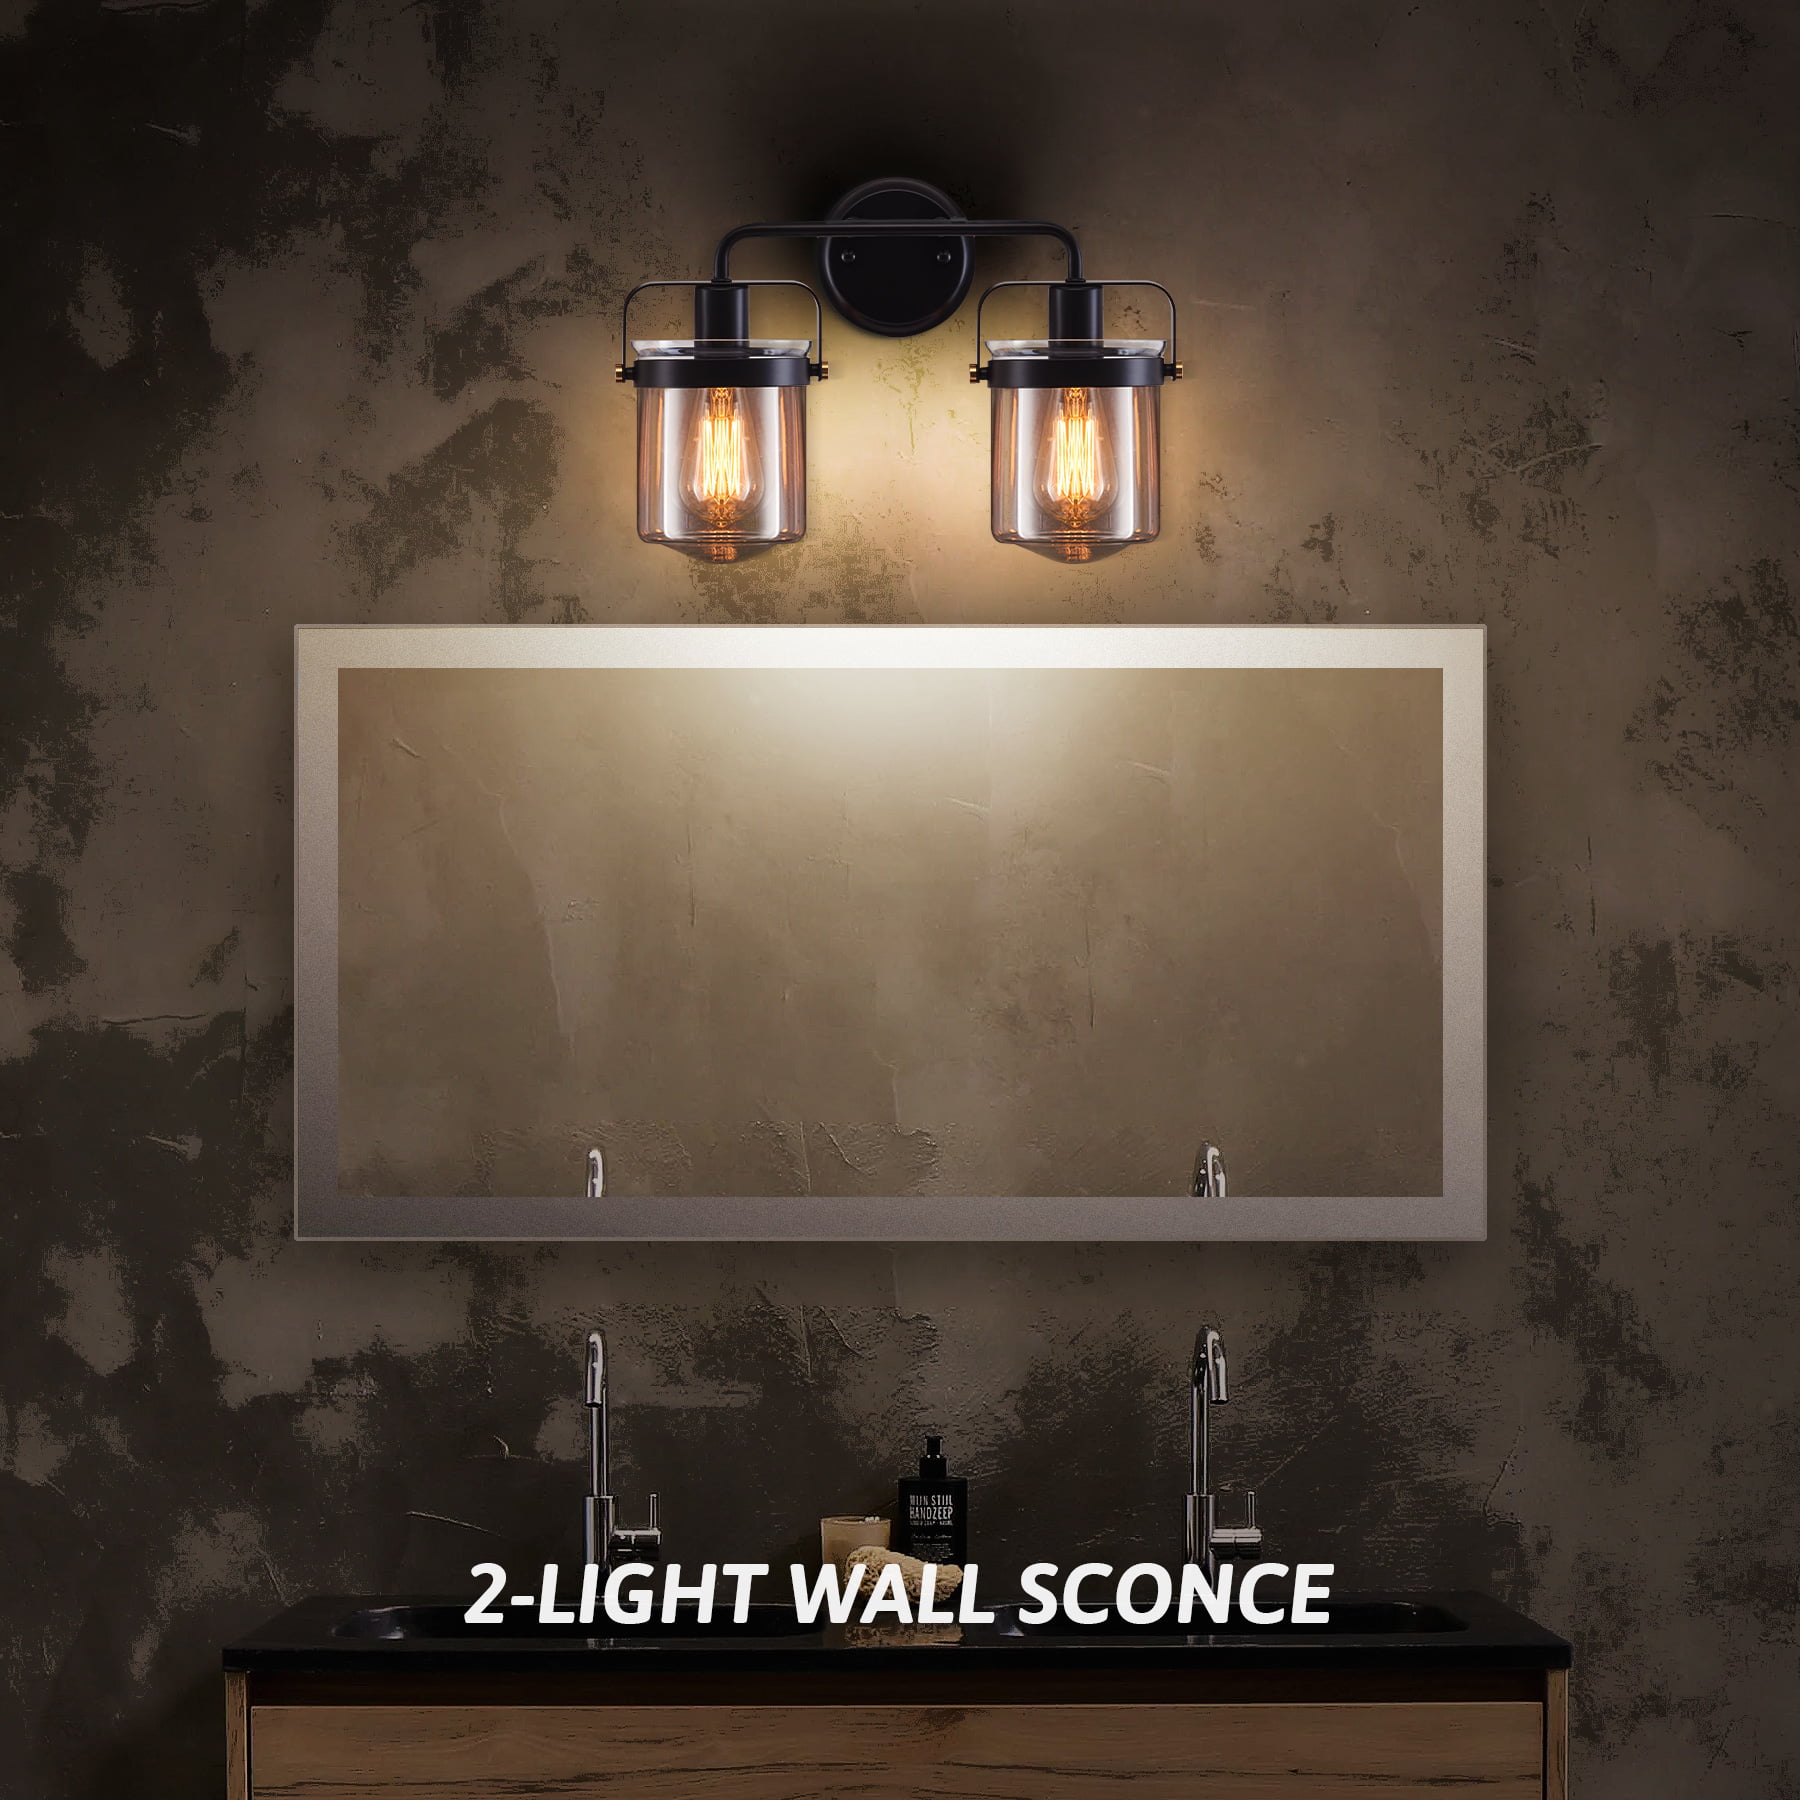 videnskabsmand blast Mere end noget andet Lantern Wall Sconce Farmhouse Light Fixture with Glass Shade for 60W Bulbs  Black- 3-Light Sconce - Walmart.com